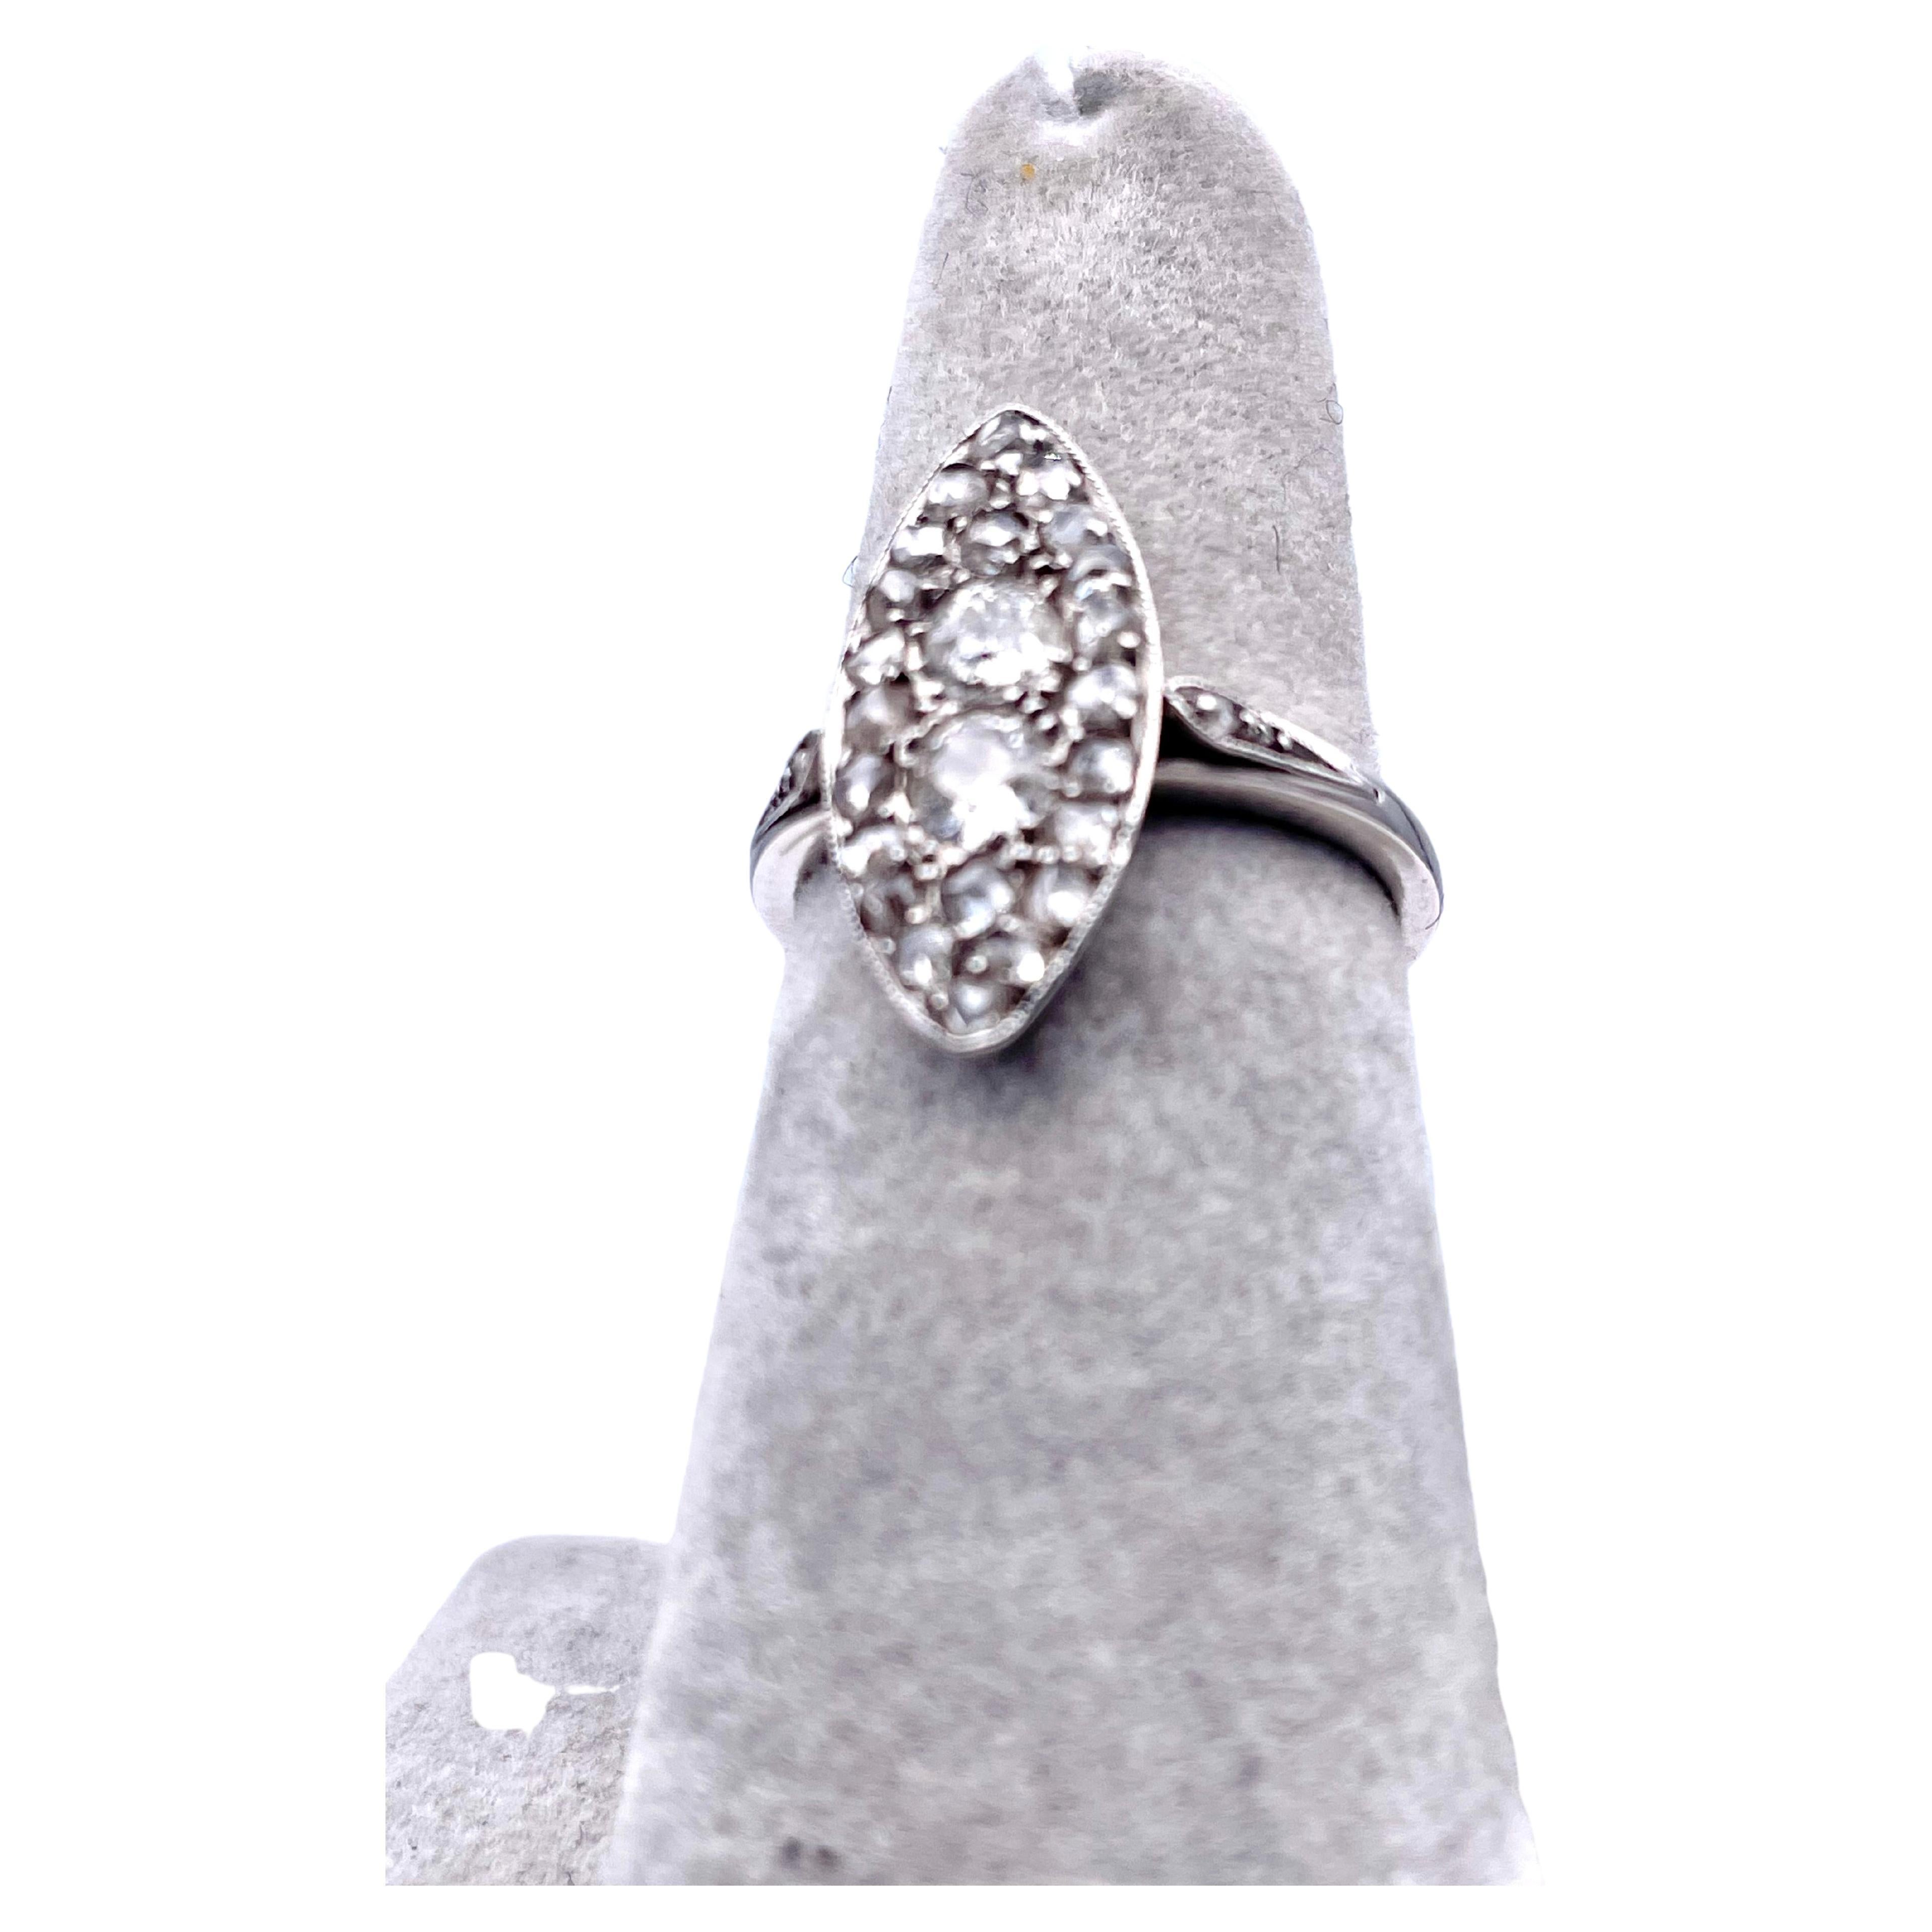 Edwardian Diamond Platinum Ring